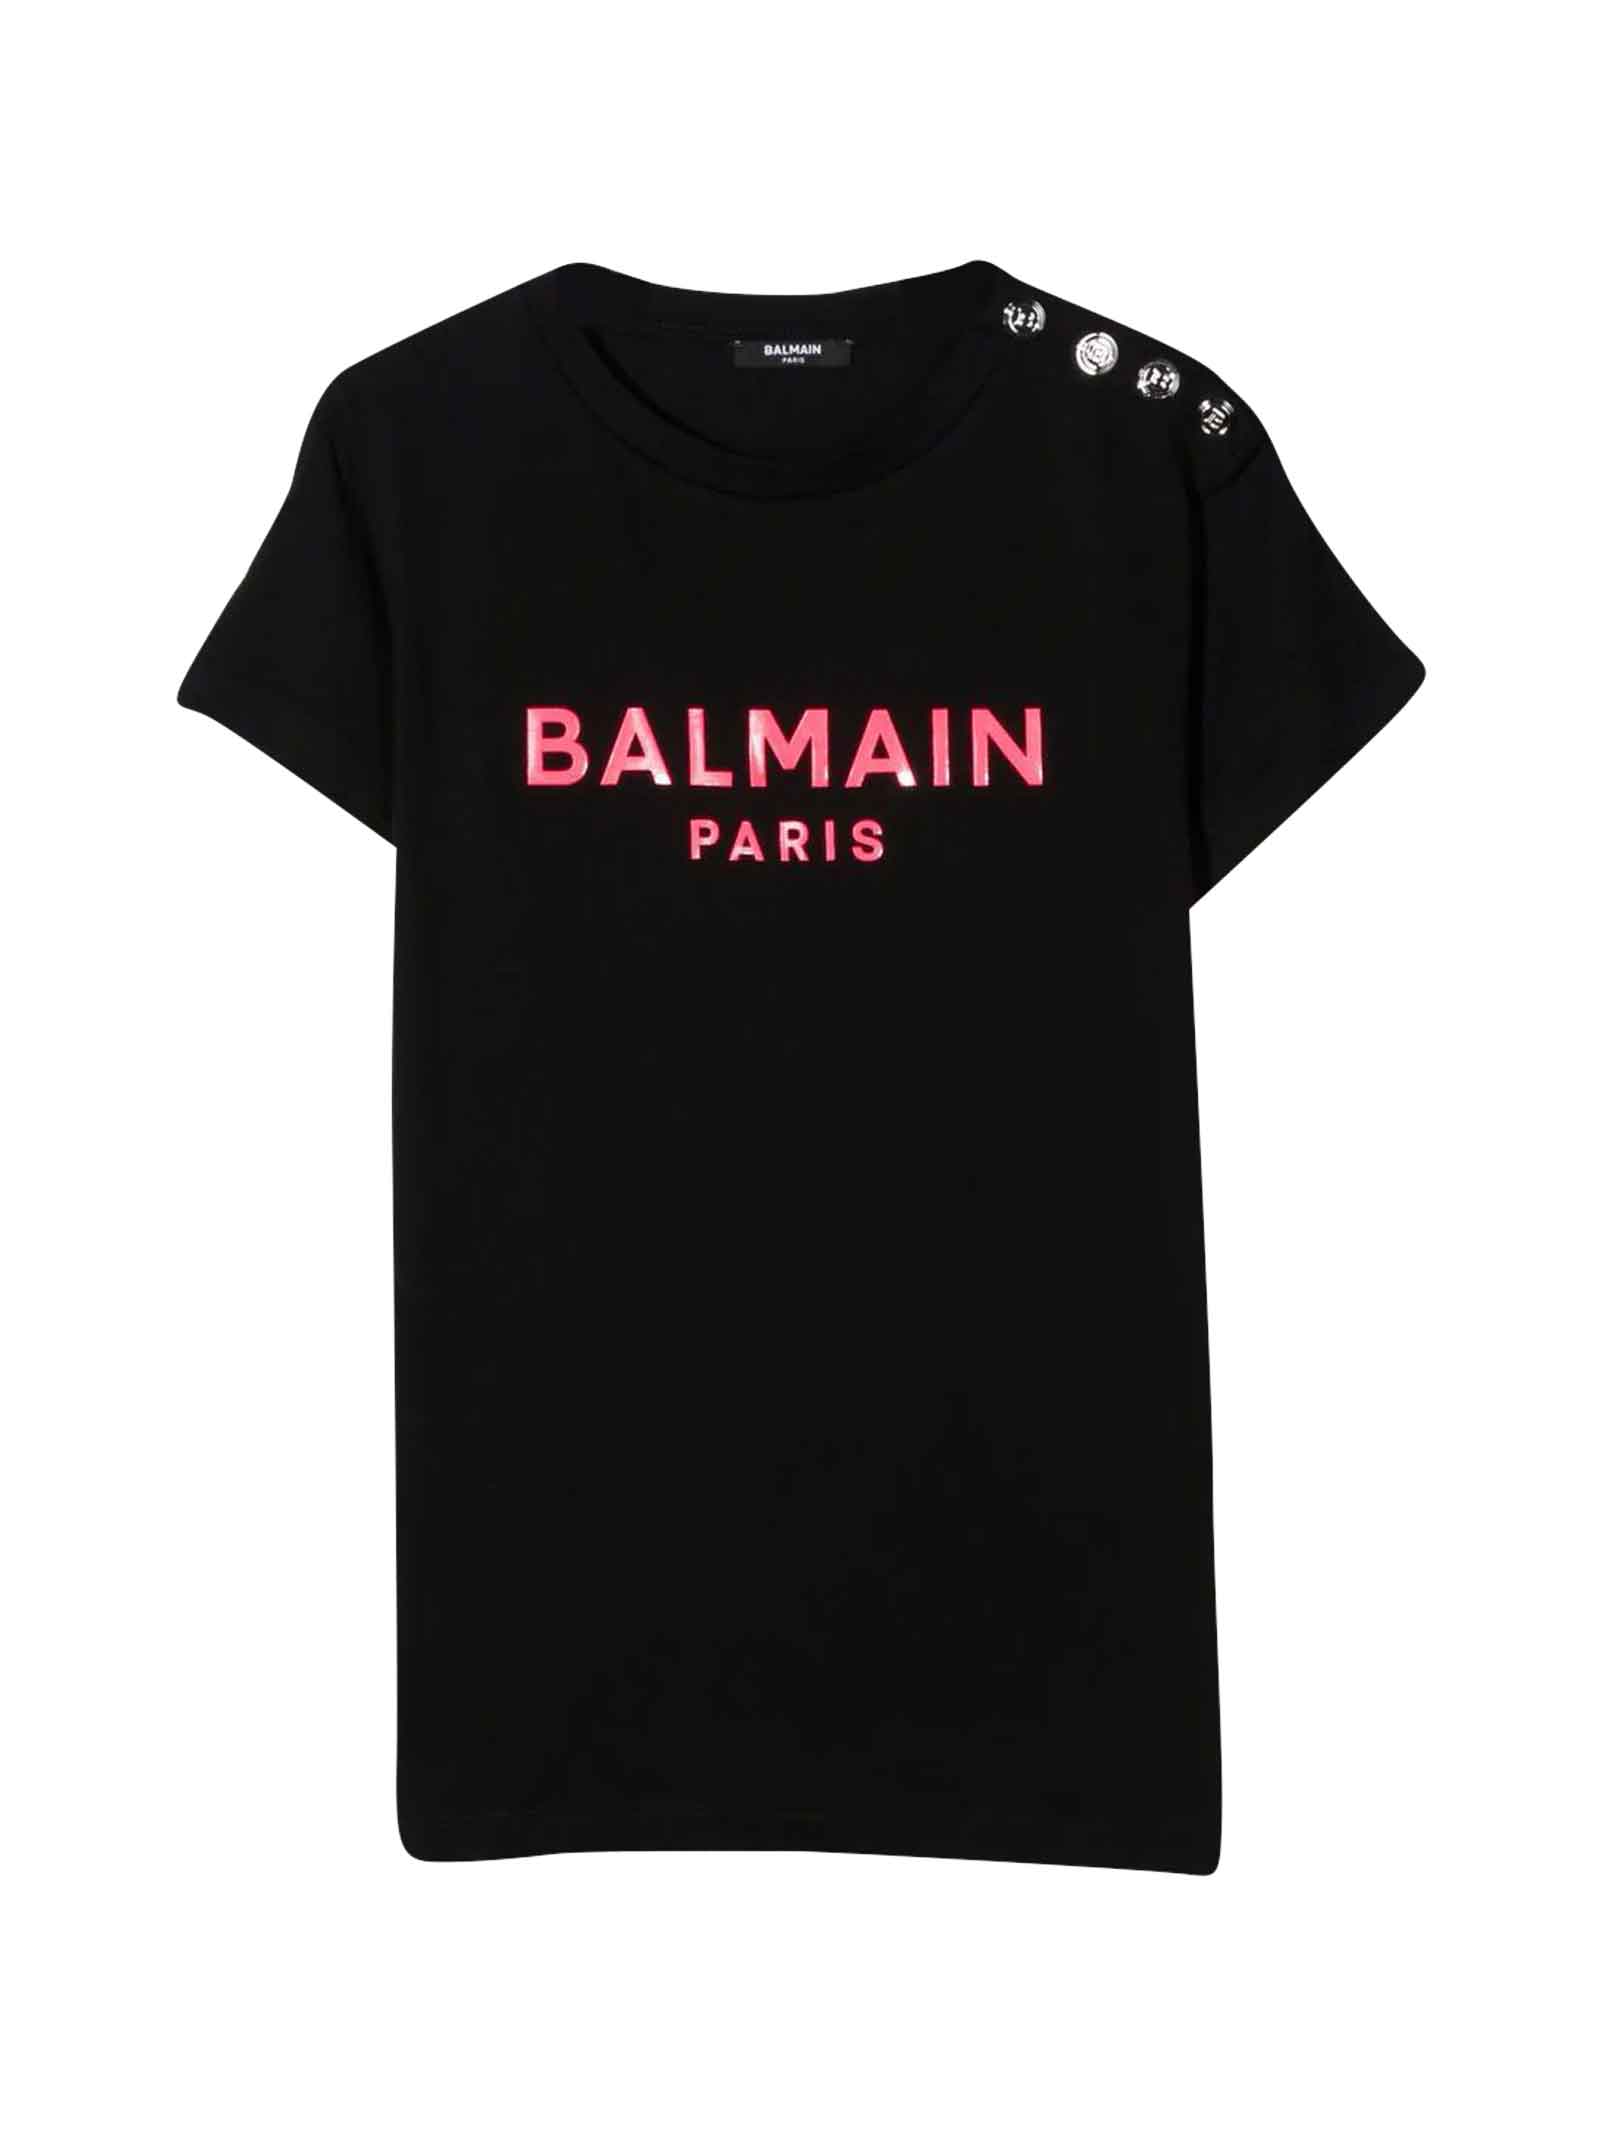 Balmain black t-shirt with fucsia print